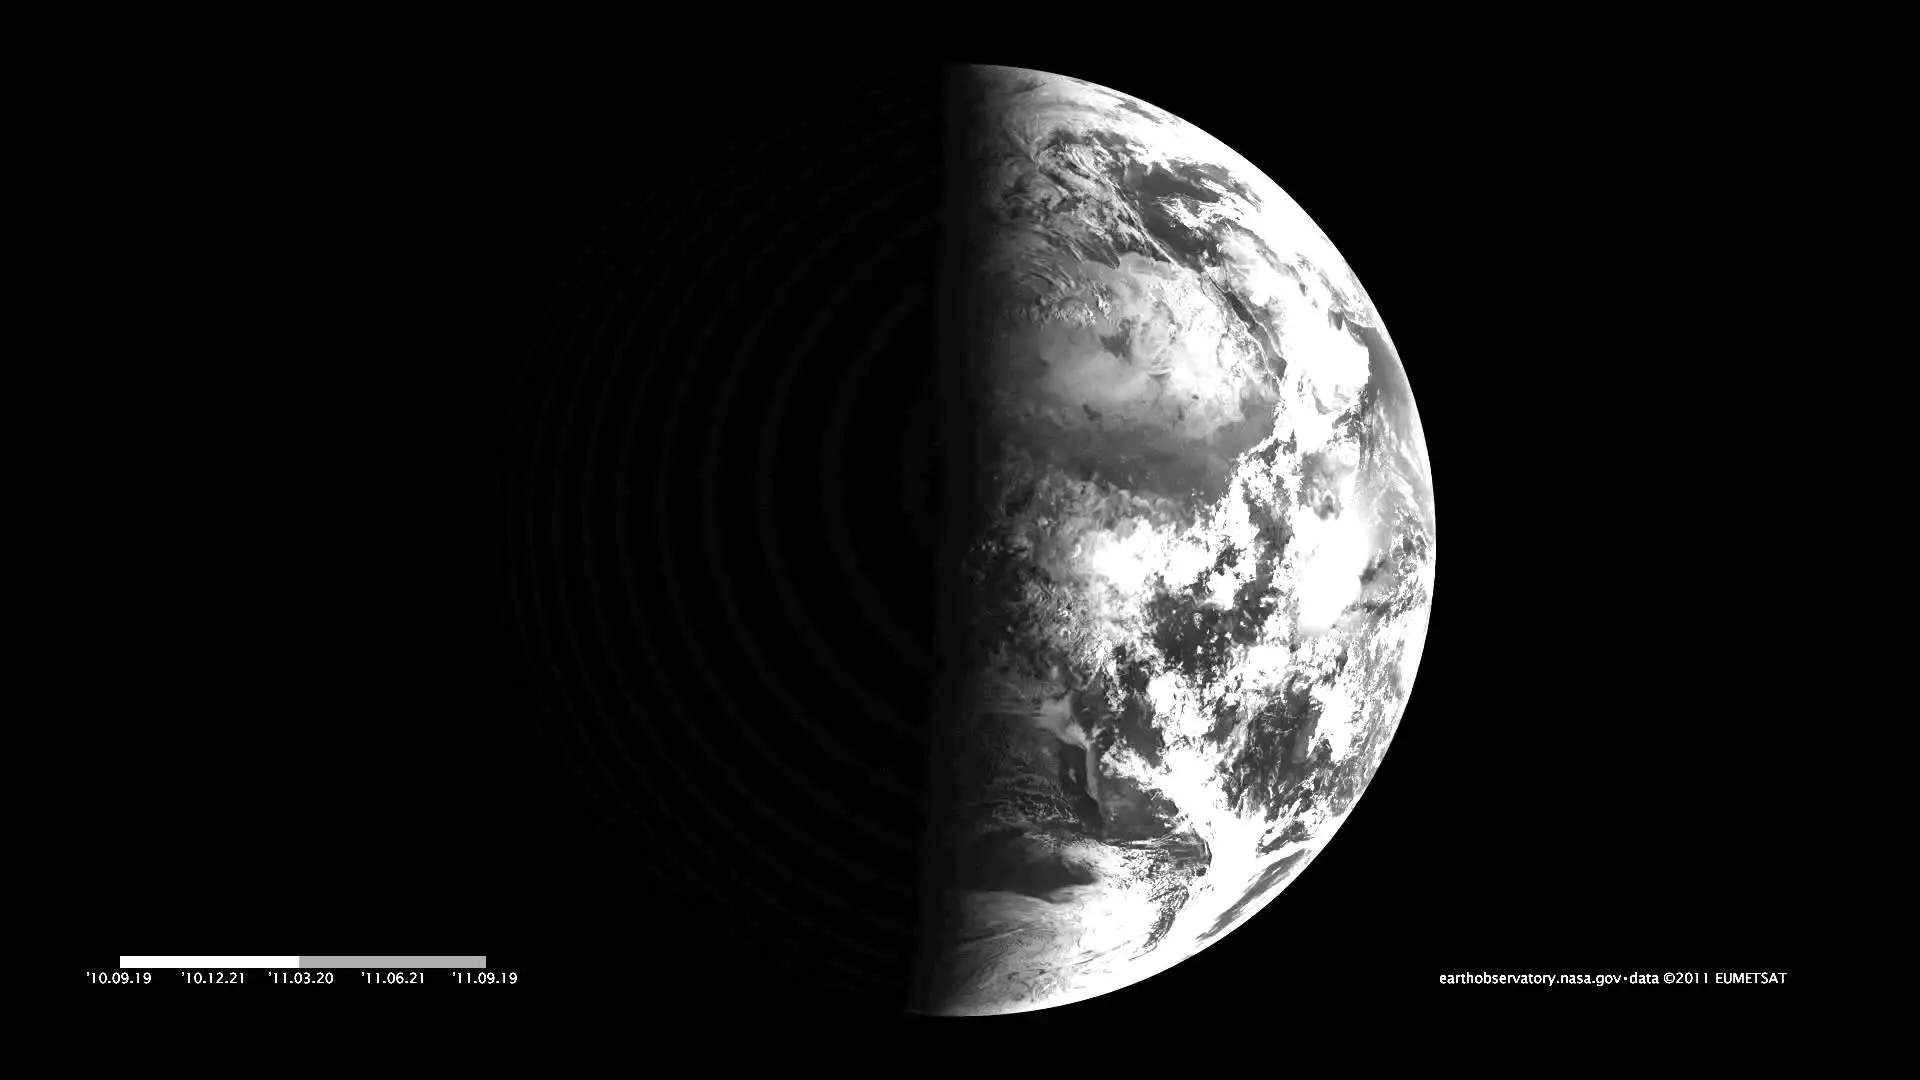 [Equinox on a Spinning Earth](https://img.youtube.com/vi/LUW51lvIFjg/maxresdefault.jpg)